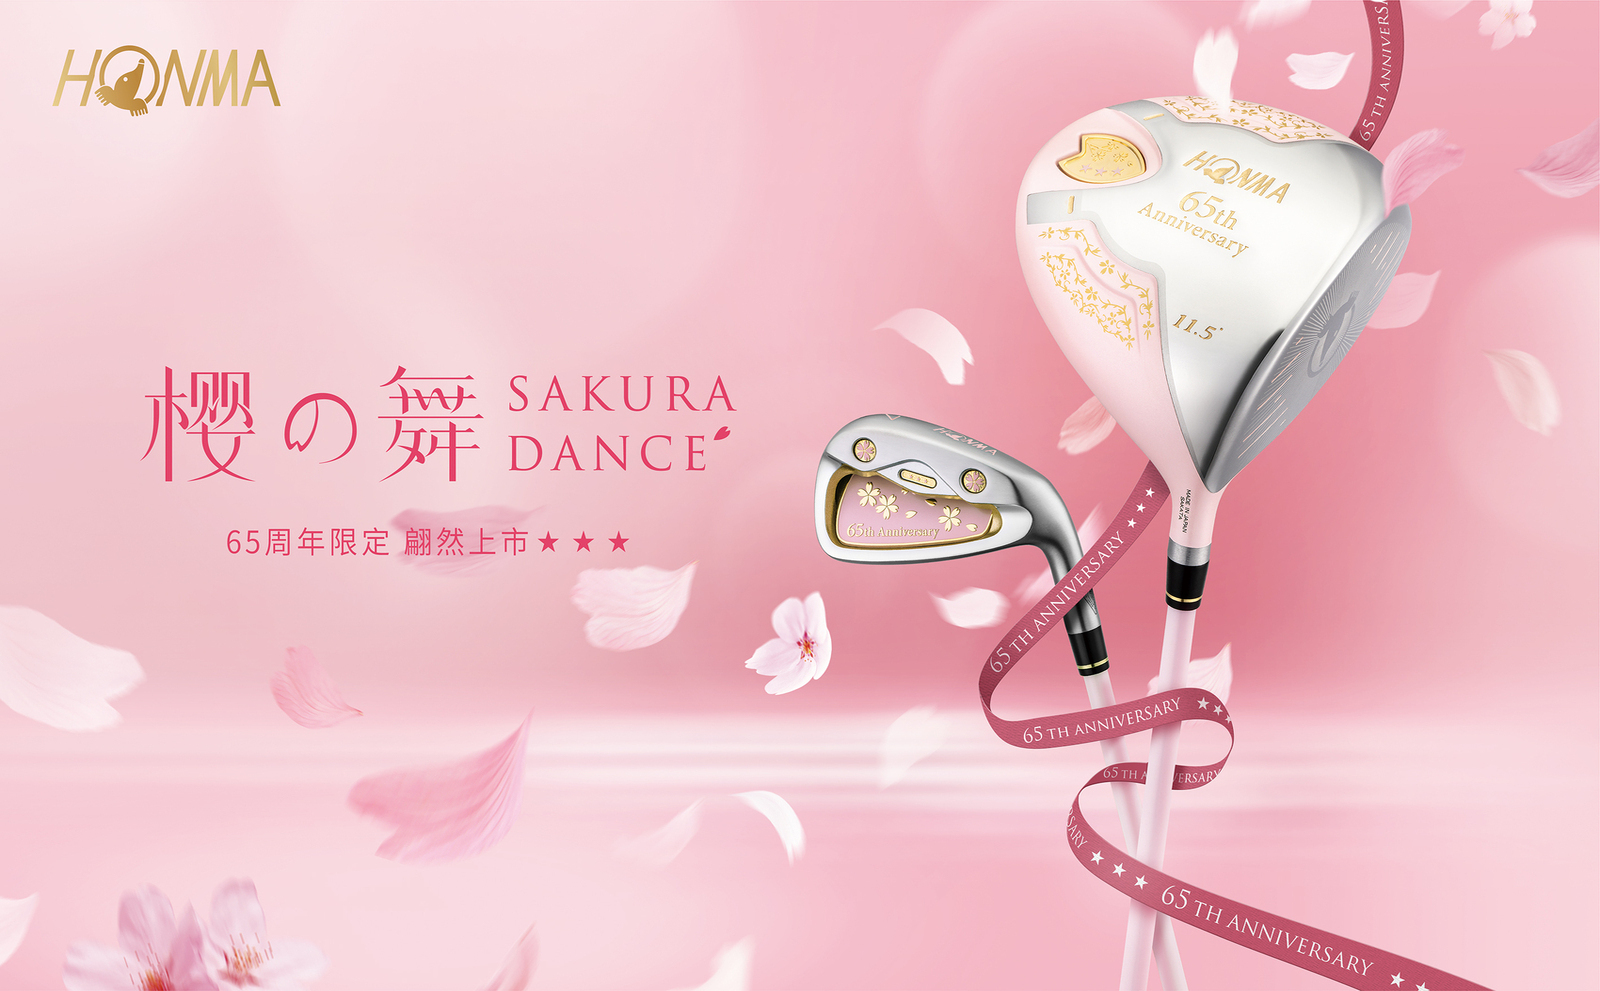 65th Anniversary Limited Edition Series of HONMA SAKURA DANCE